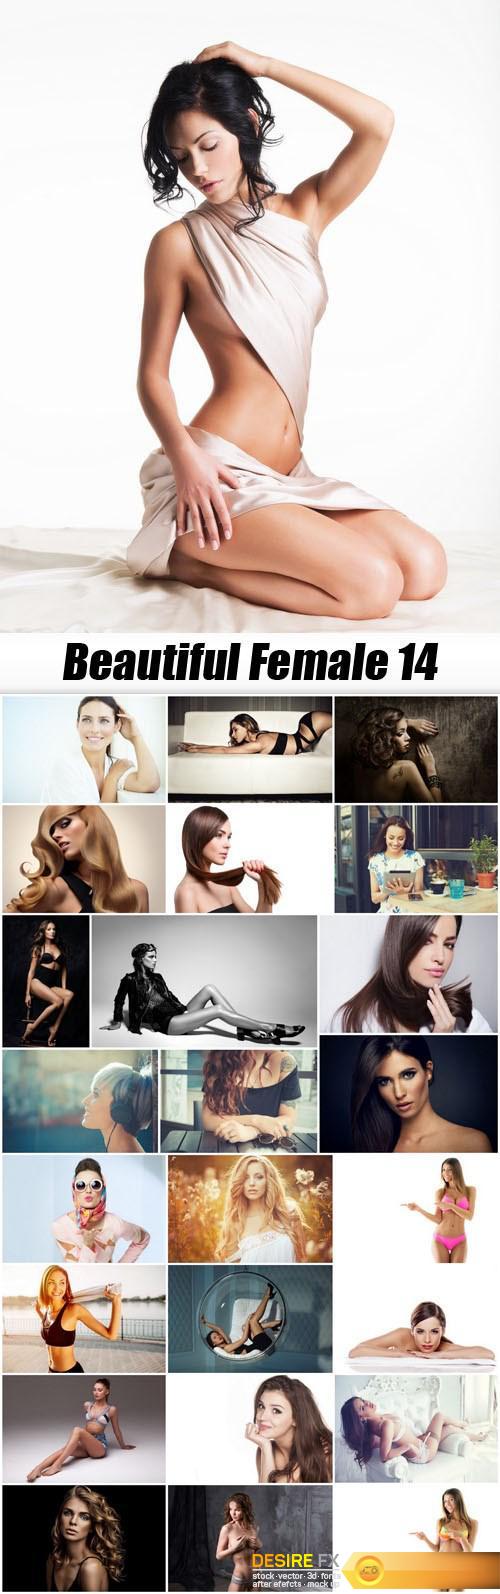 Beautiful Female 14 - 25 UHQ JPEG